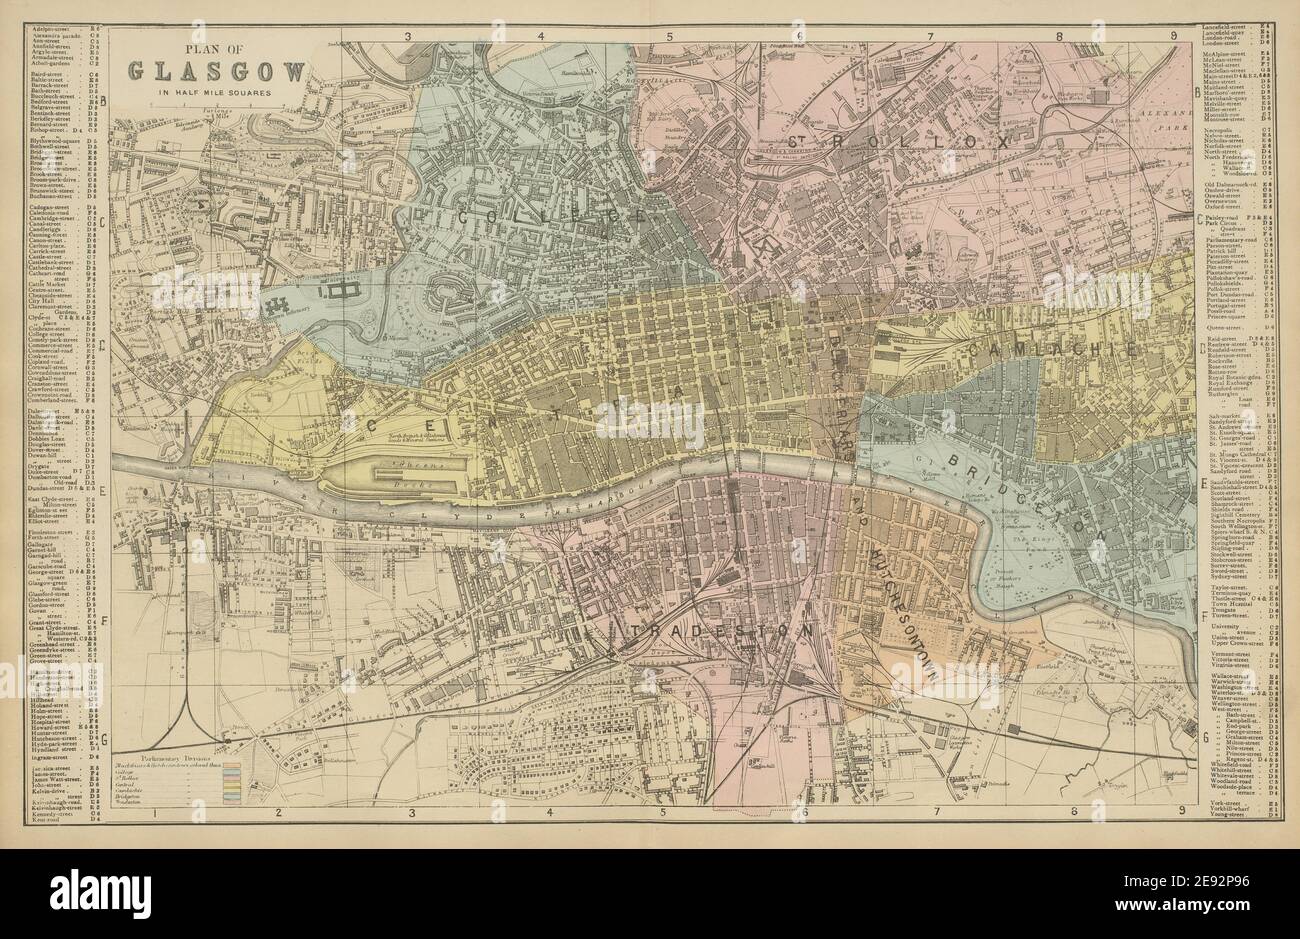 GLASGOW Dennistoun Calton town cityhead town city plan GW BACON 1885 old map Stock Photo